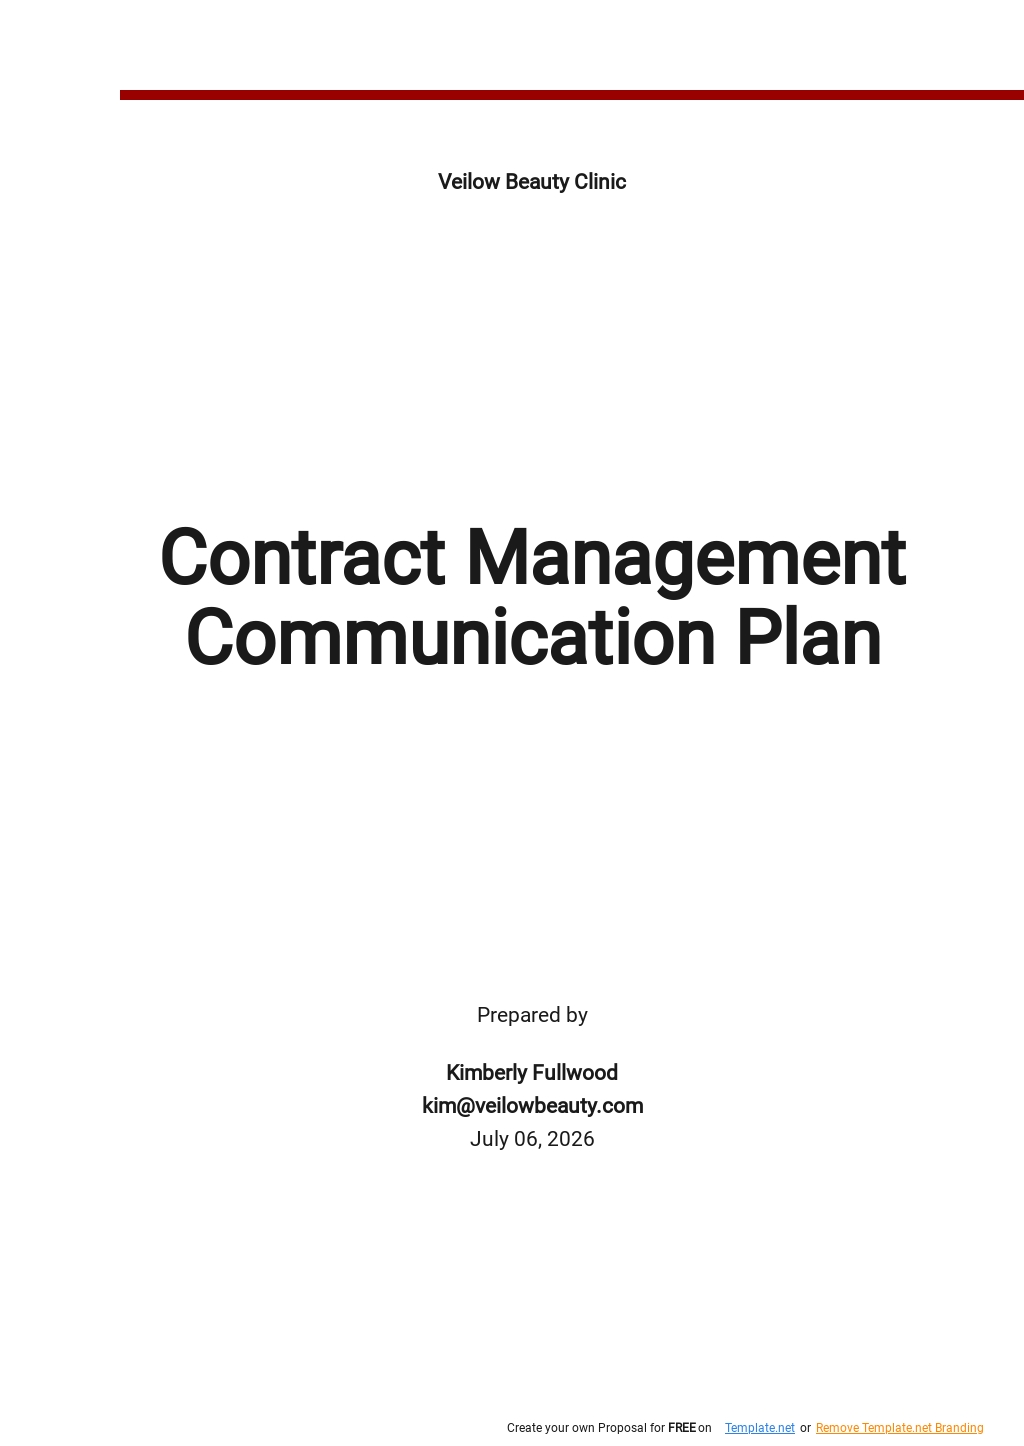 Contract Management Communication Plan Template